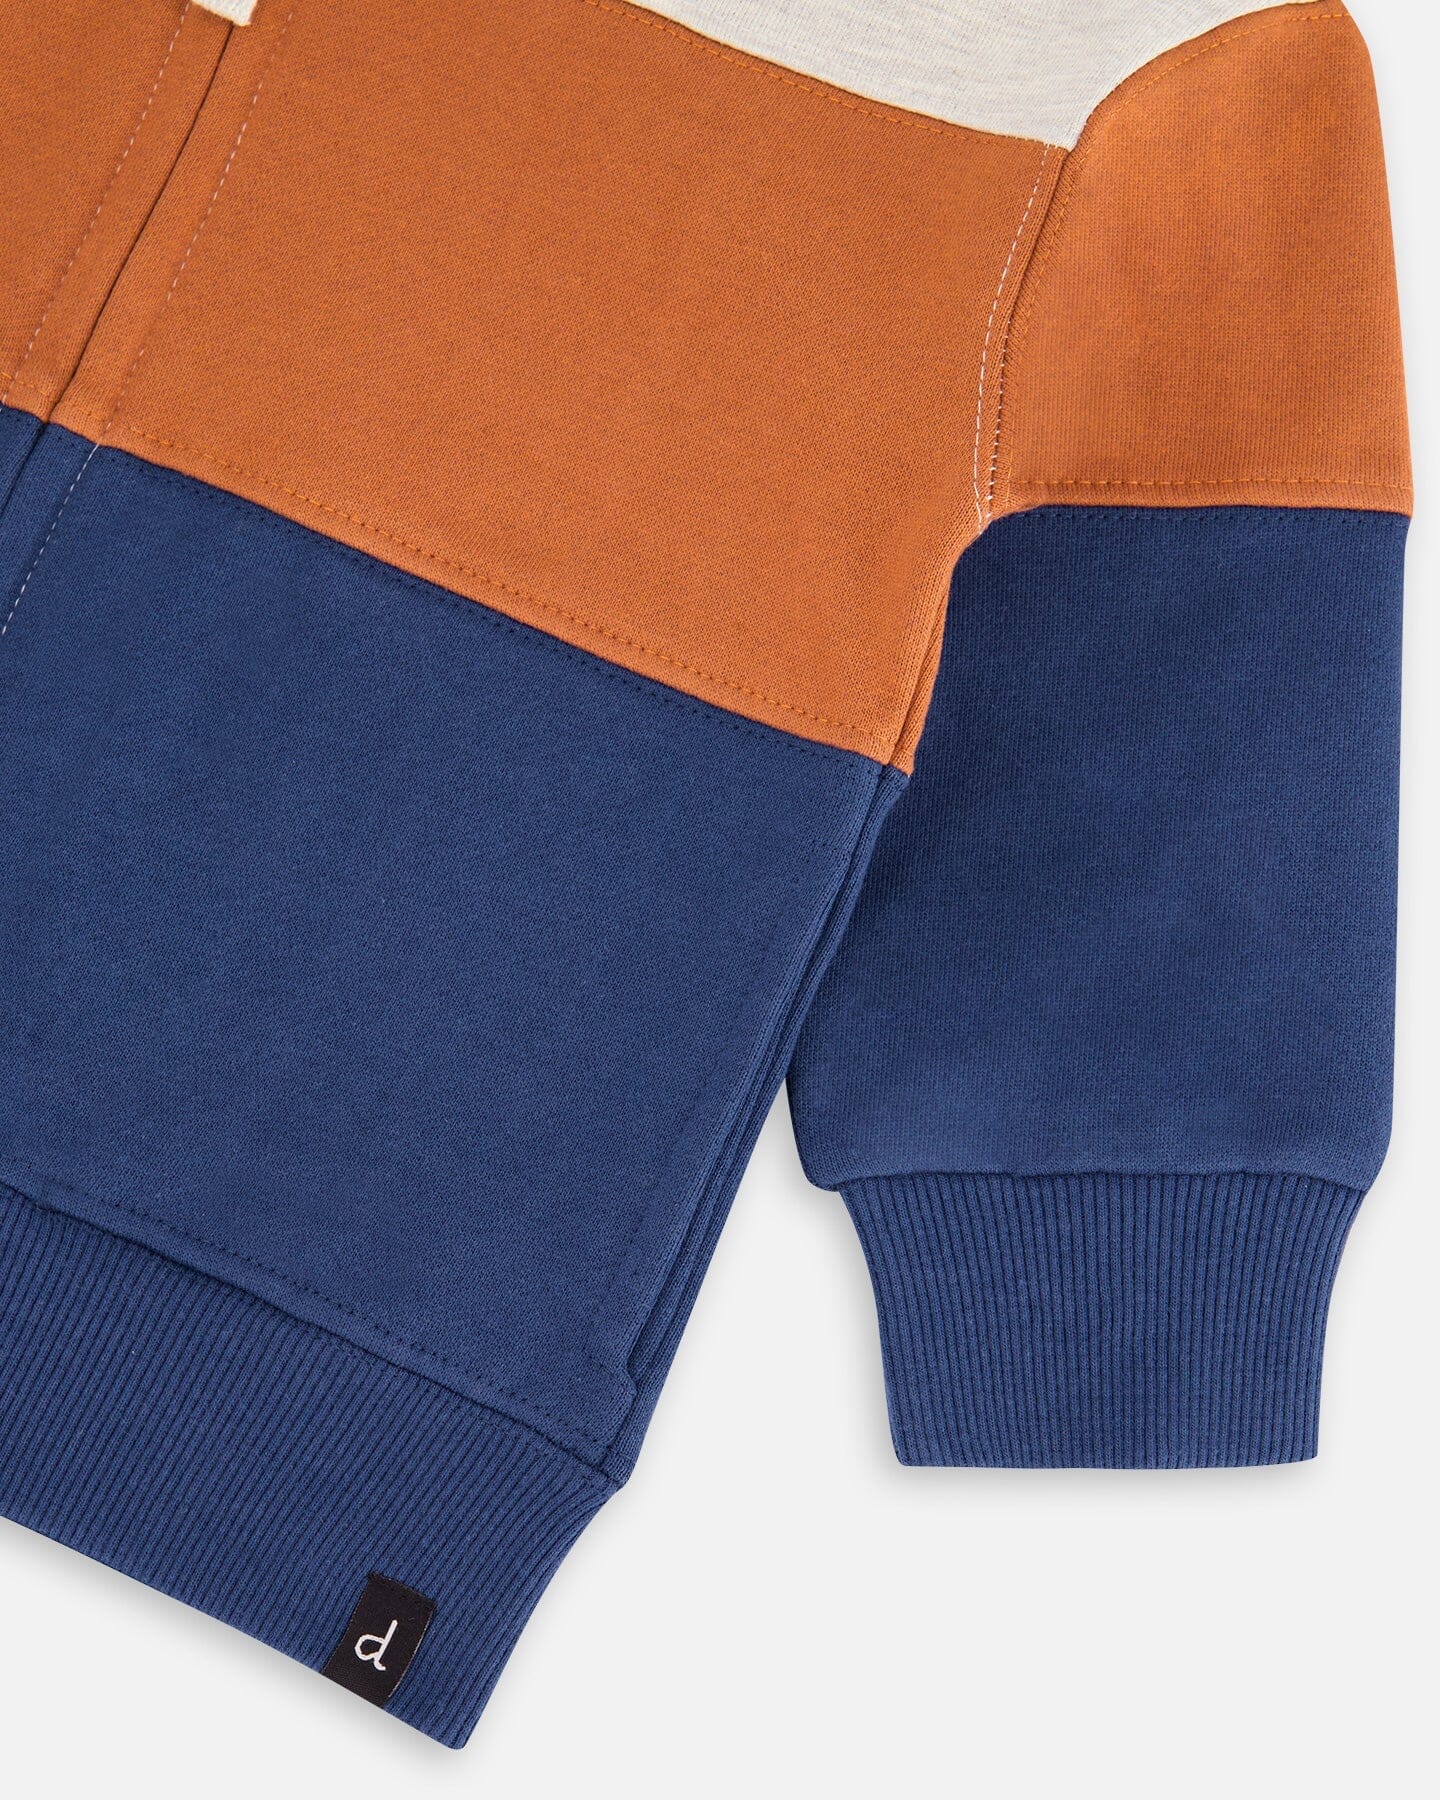 Full Zip Color Block Hooded Fleece Indigo Blue, Brown And Ivory Stripe - F20T30_450